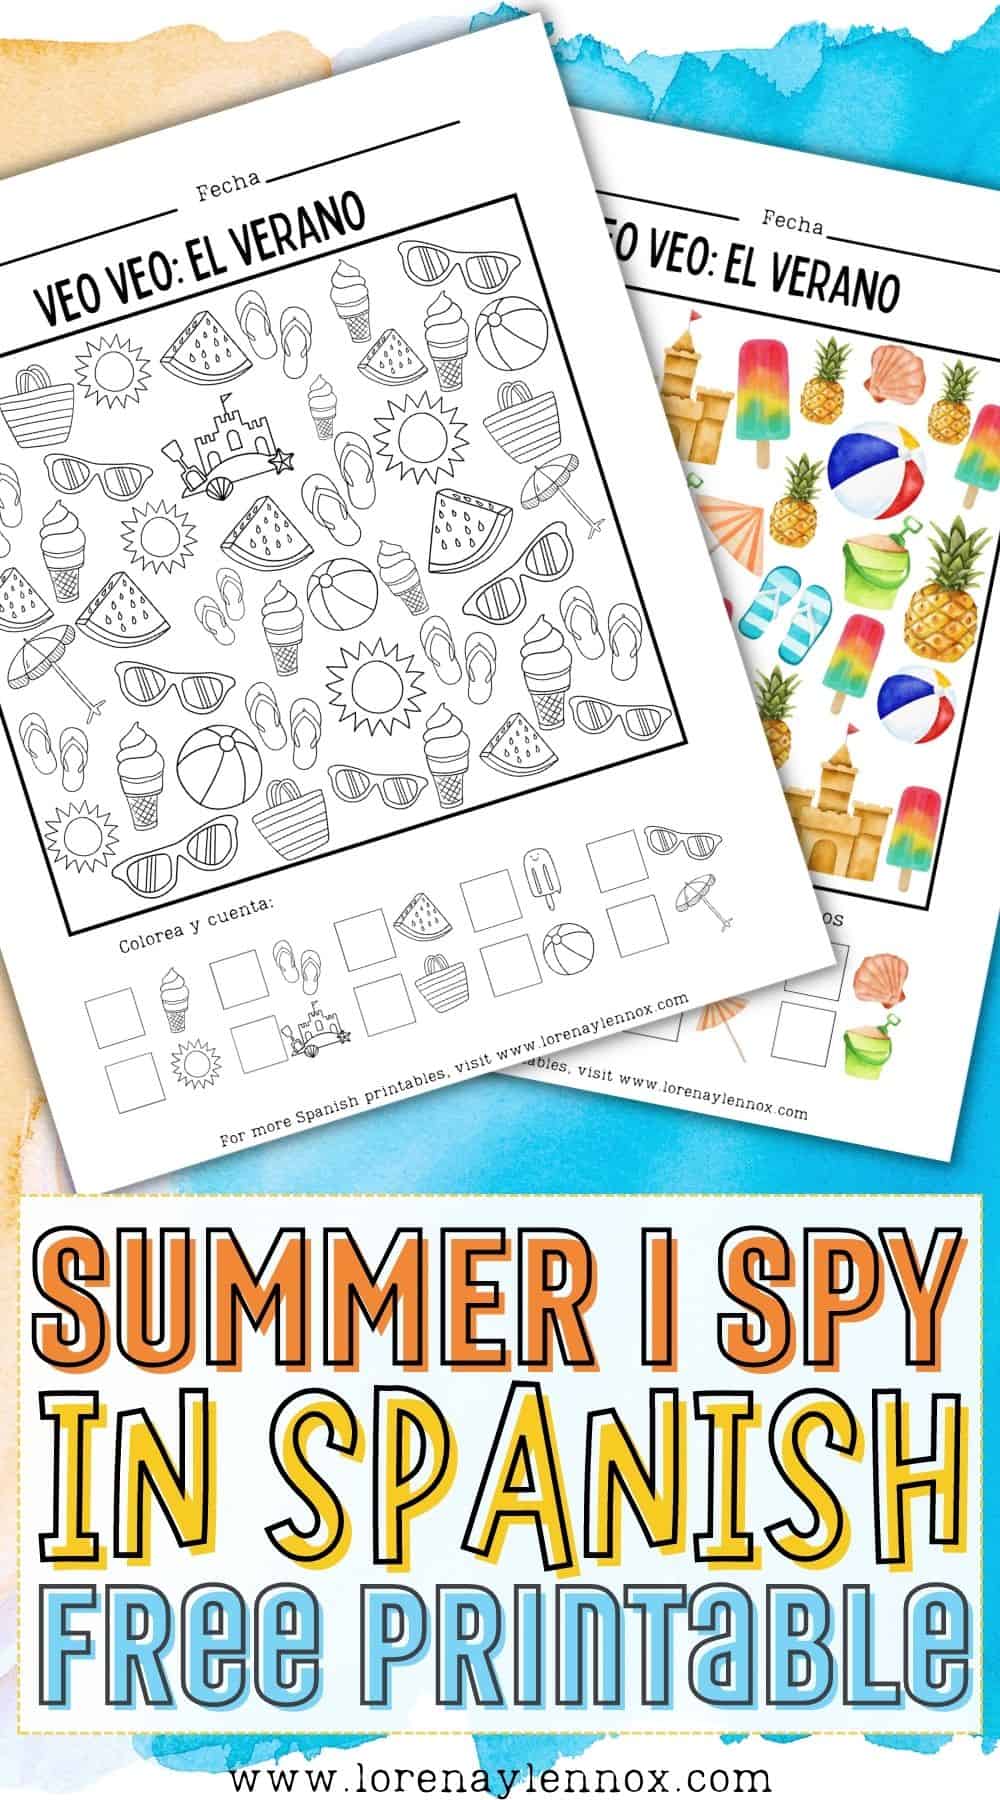 Summer I Spy Free Printable in Spanish